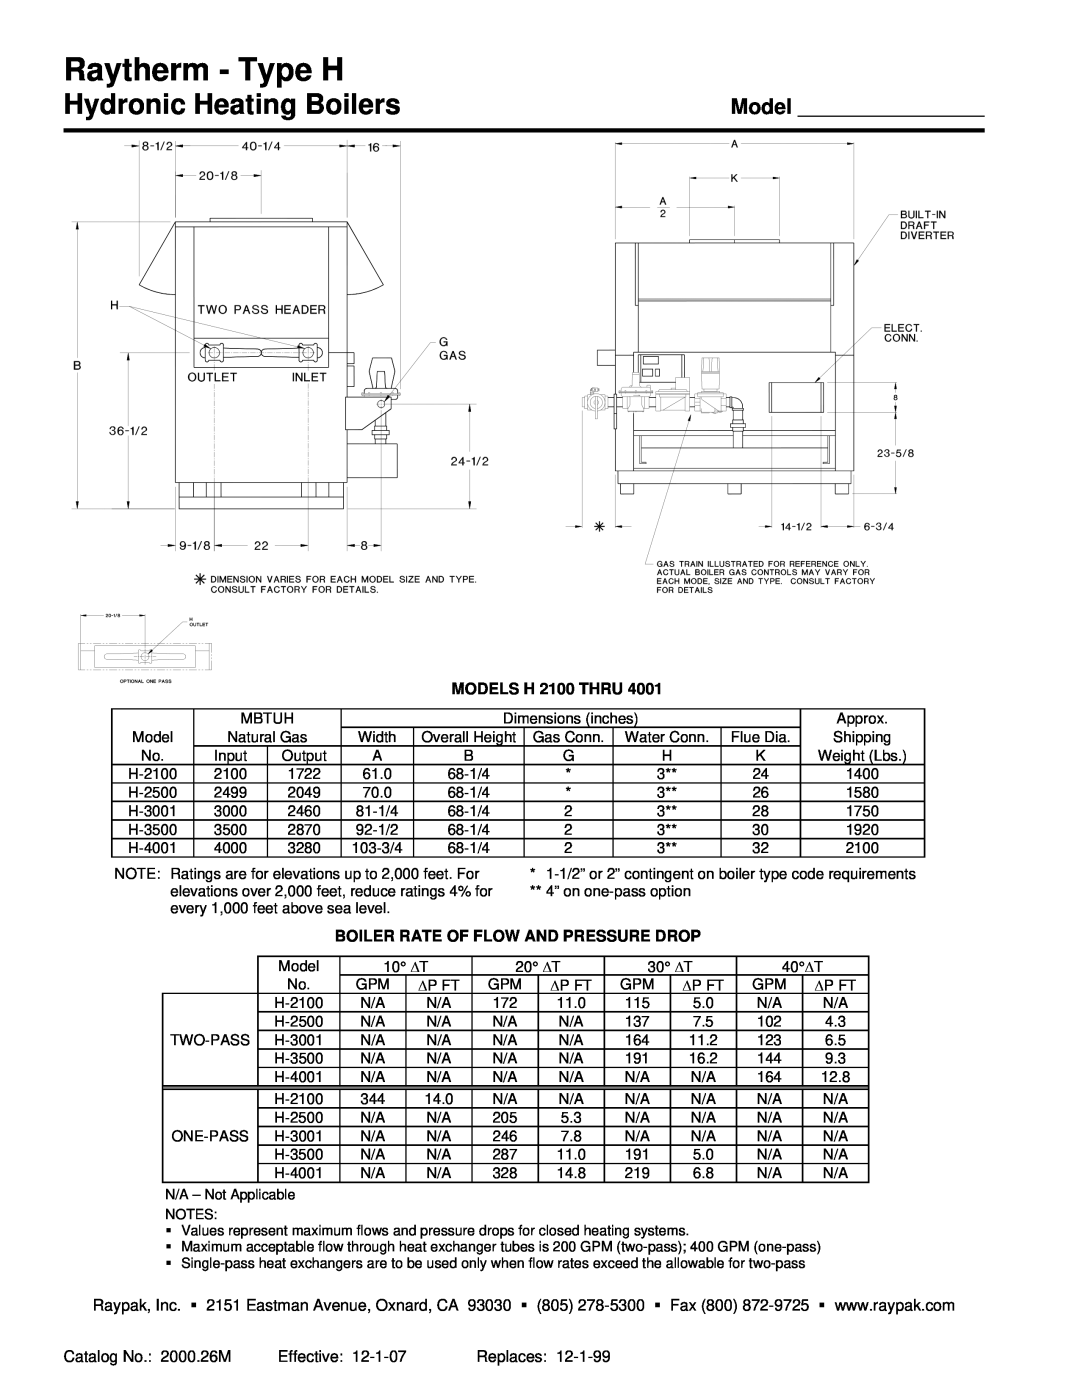 Raypak 2100-4001 warranty Raytherm - Type H, Hydronic Heating Boilers, Model, MODELS H 2100 THRU 